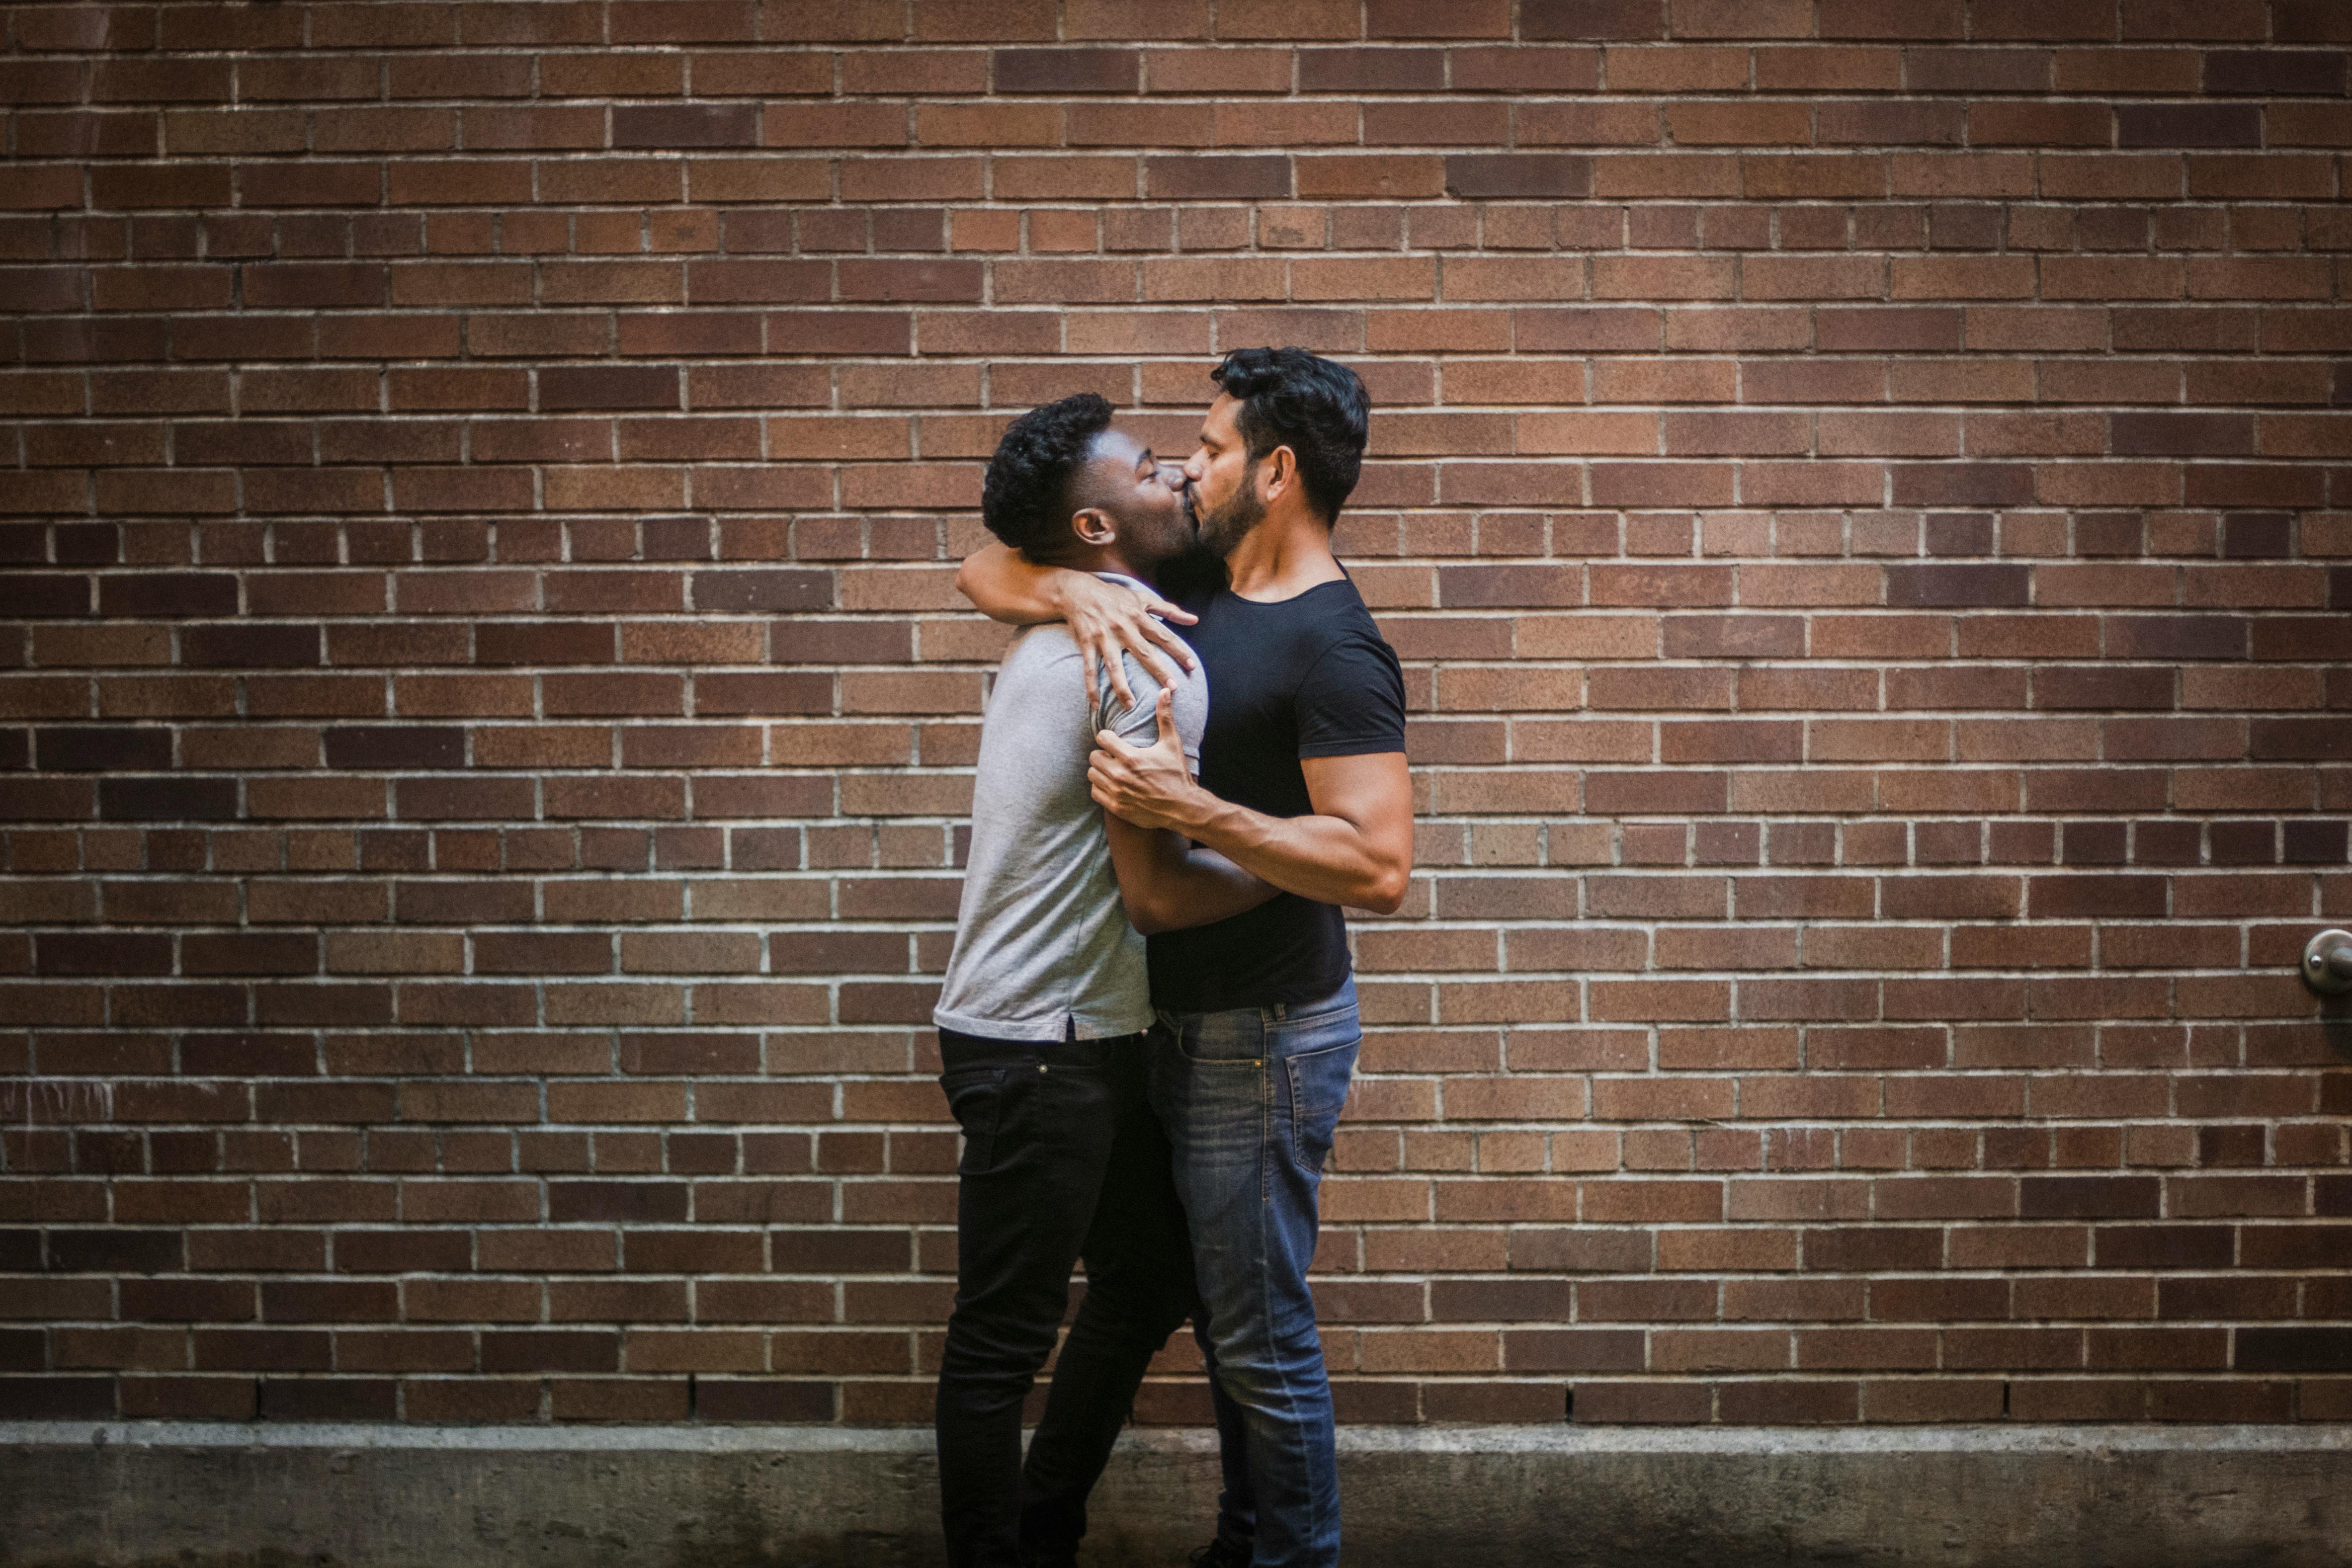 hot gay men kissing raunchy talk